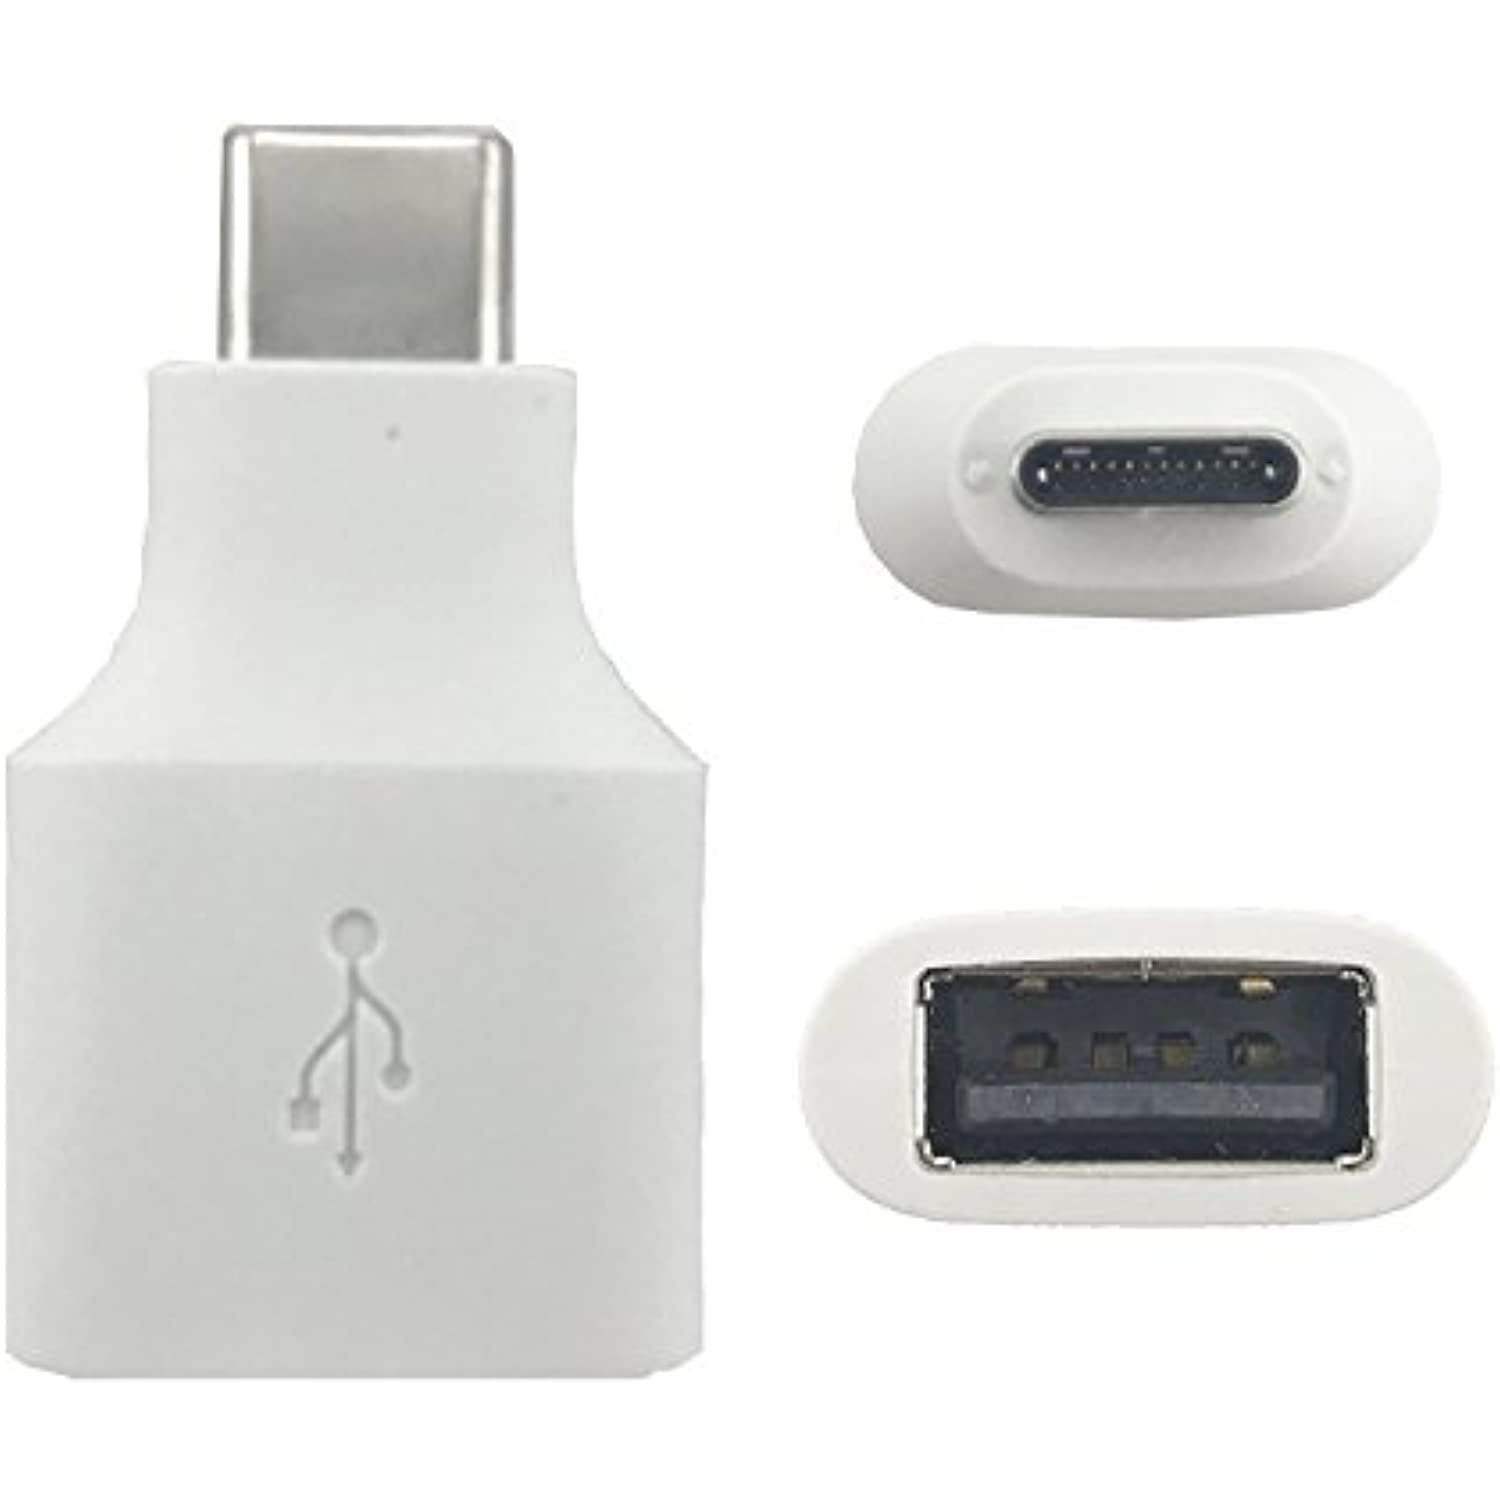 Câble Thunderbolt 3 USB-C vers USB-C (50 cm) Compatible MacBook Pro,MacBook  2016,Google Pixel,Nexus 6P,Huawei Matebook et[130] - Cdiscount Téléphonie